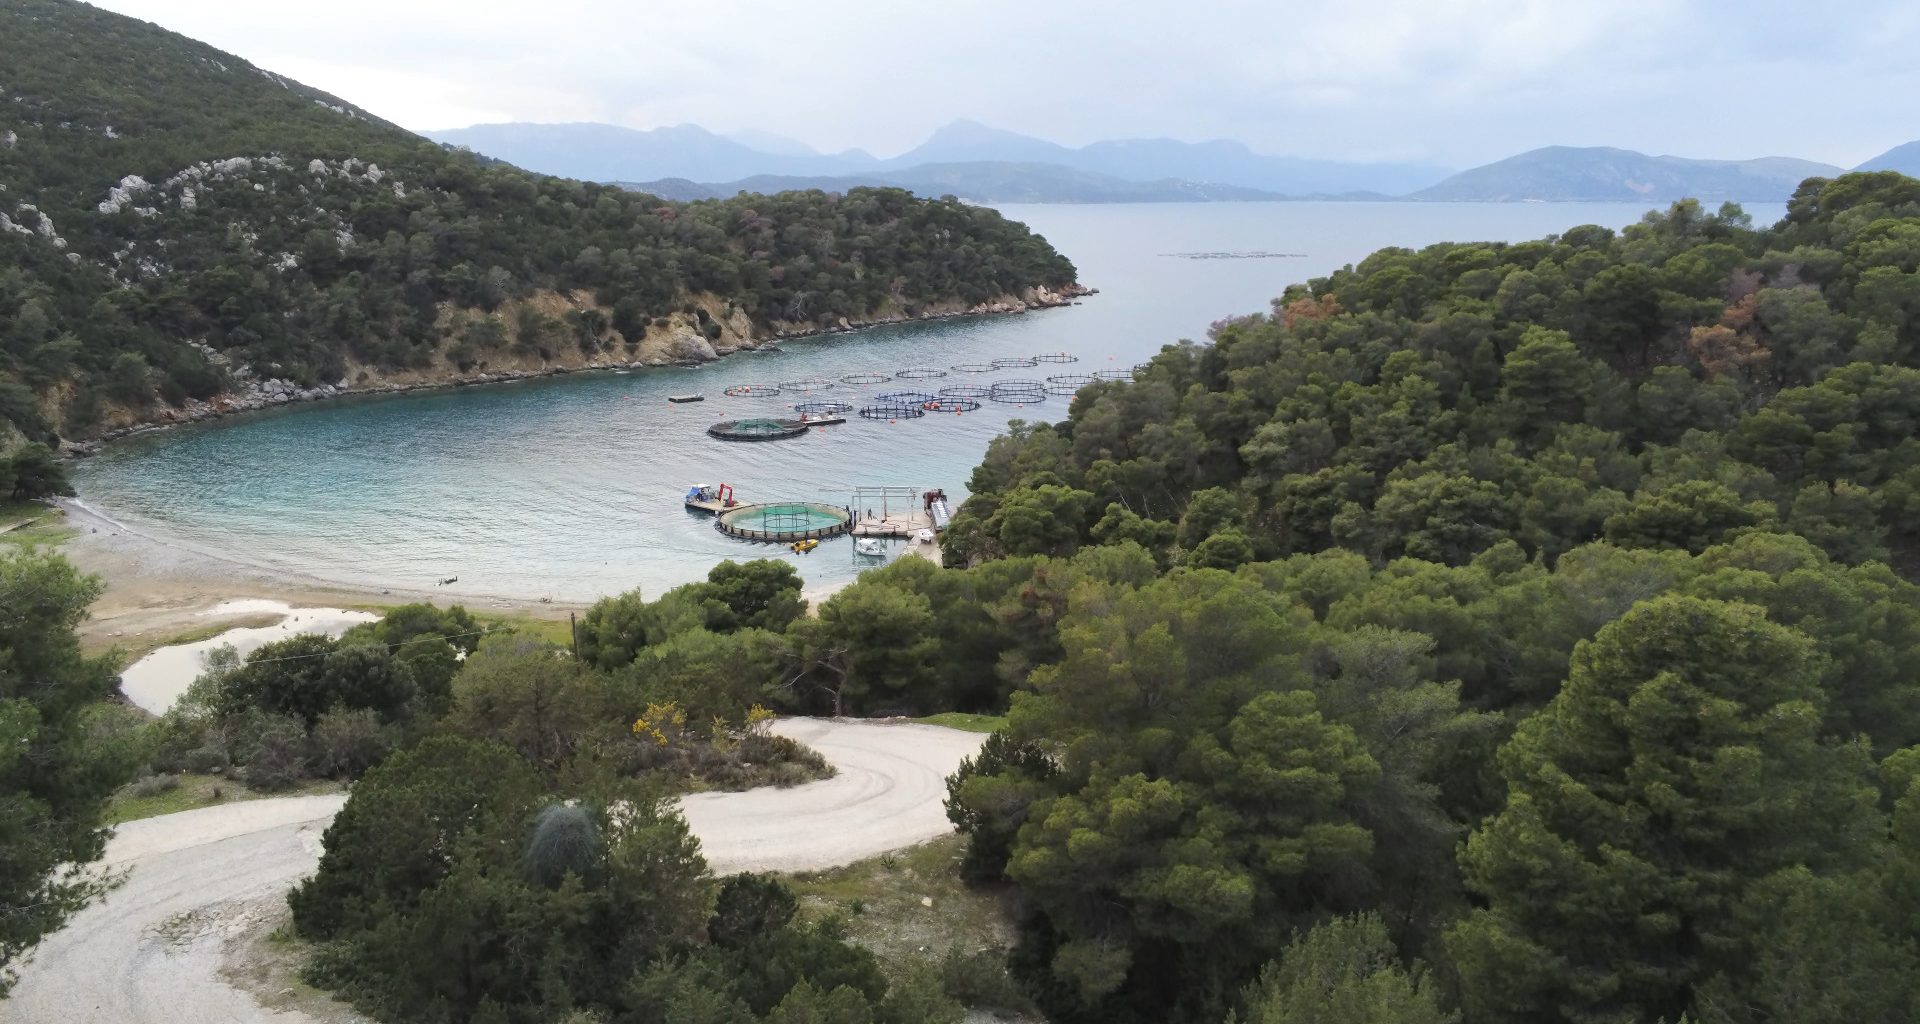 Greek island of Poros threatened by industrial fish farming, say locals 3